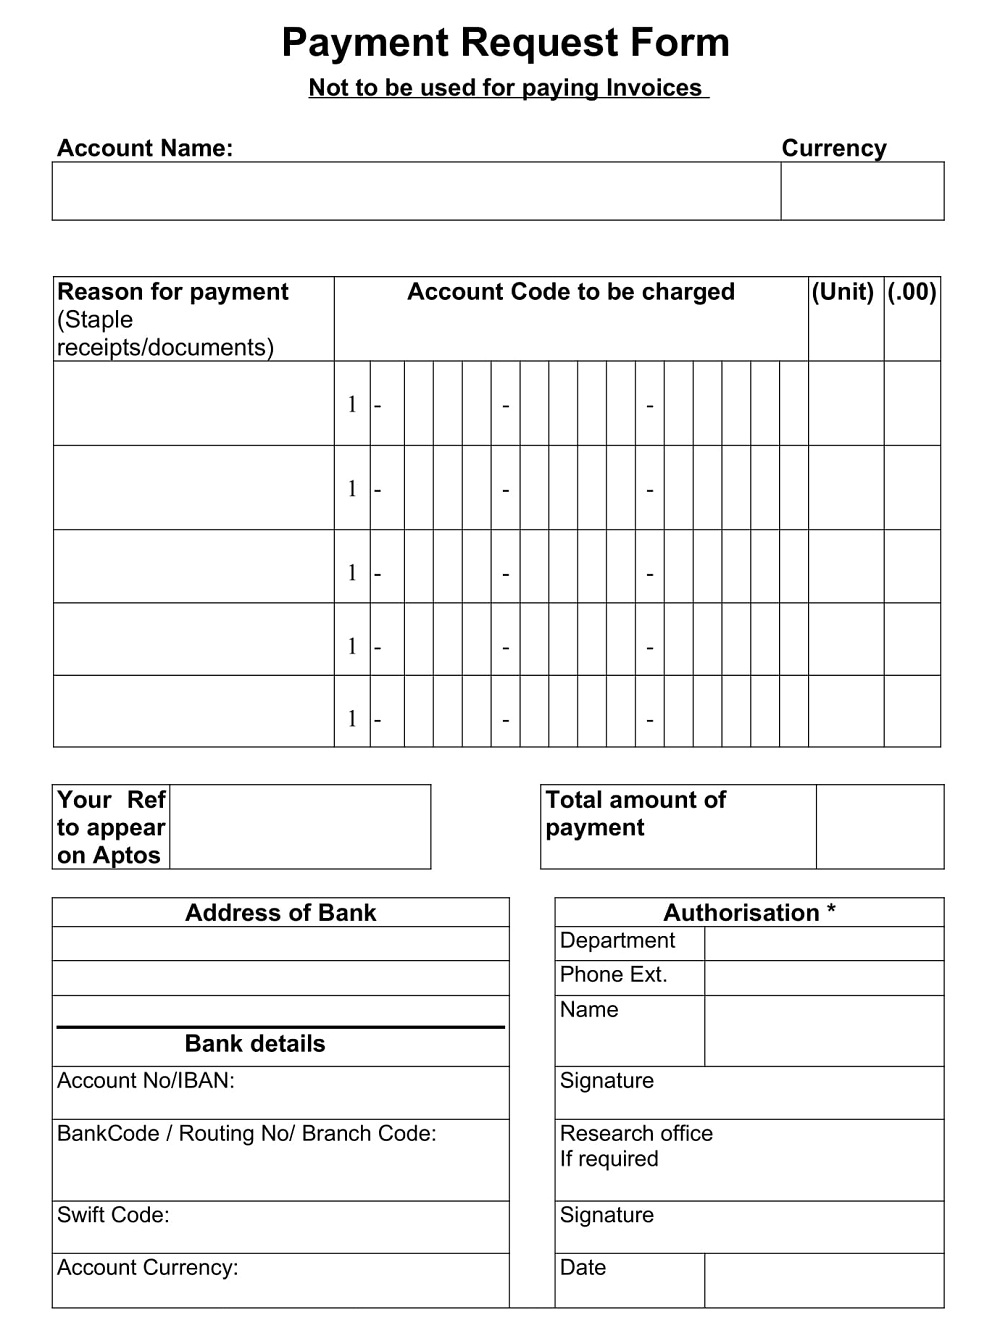 Payment Request Form DOC